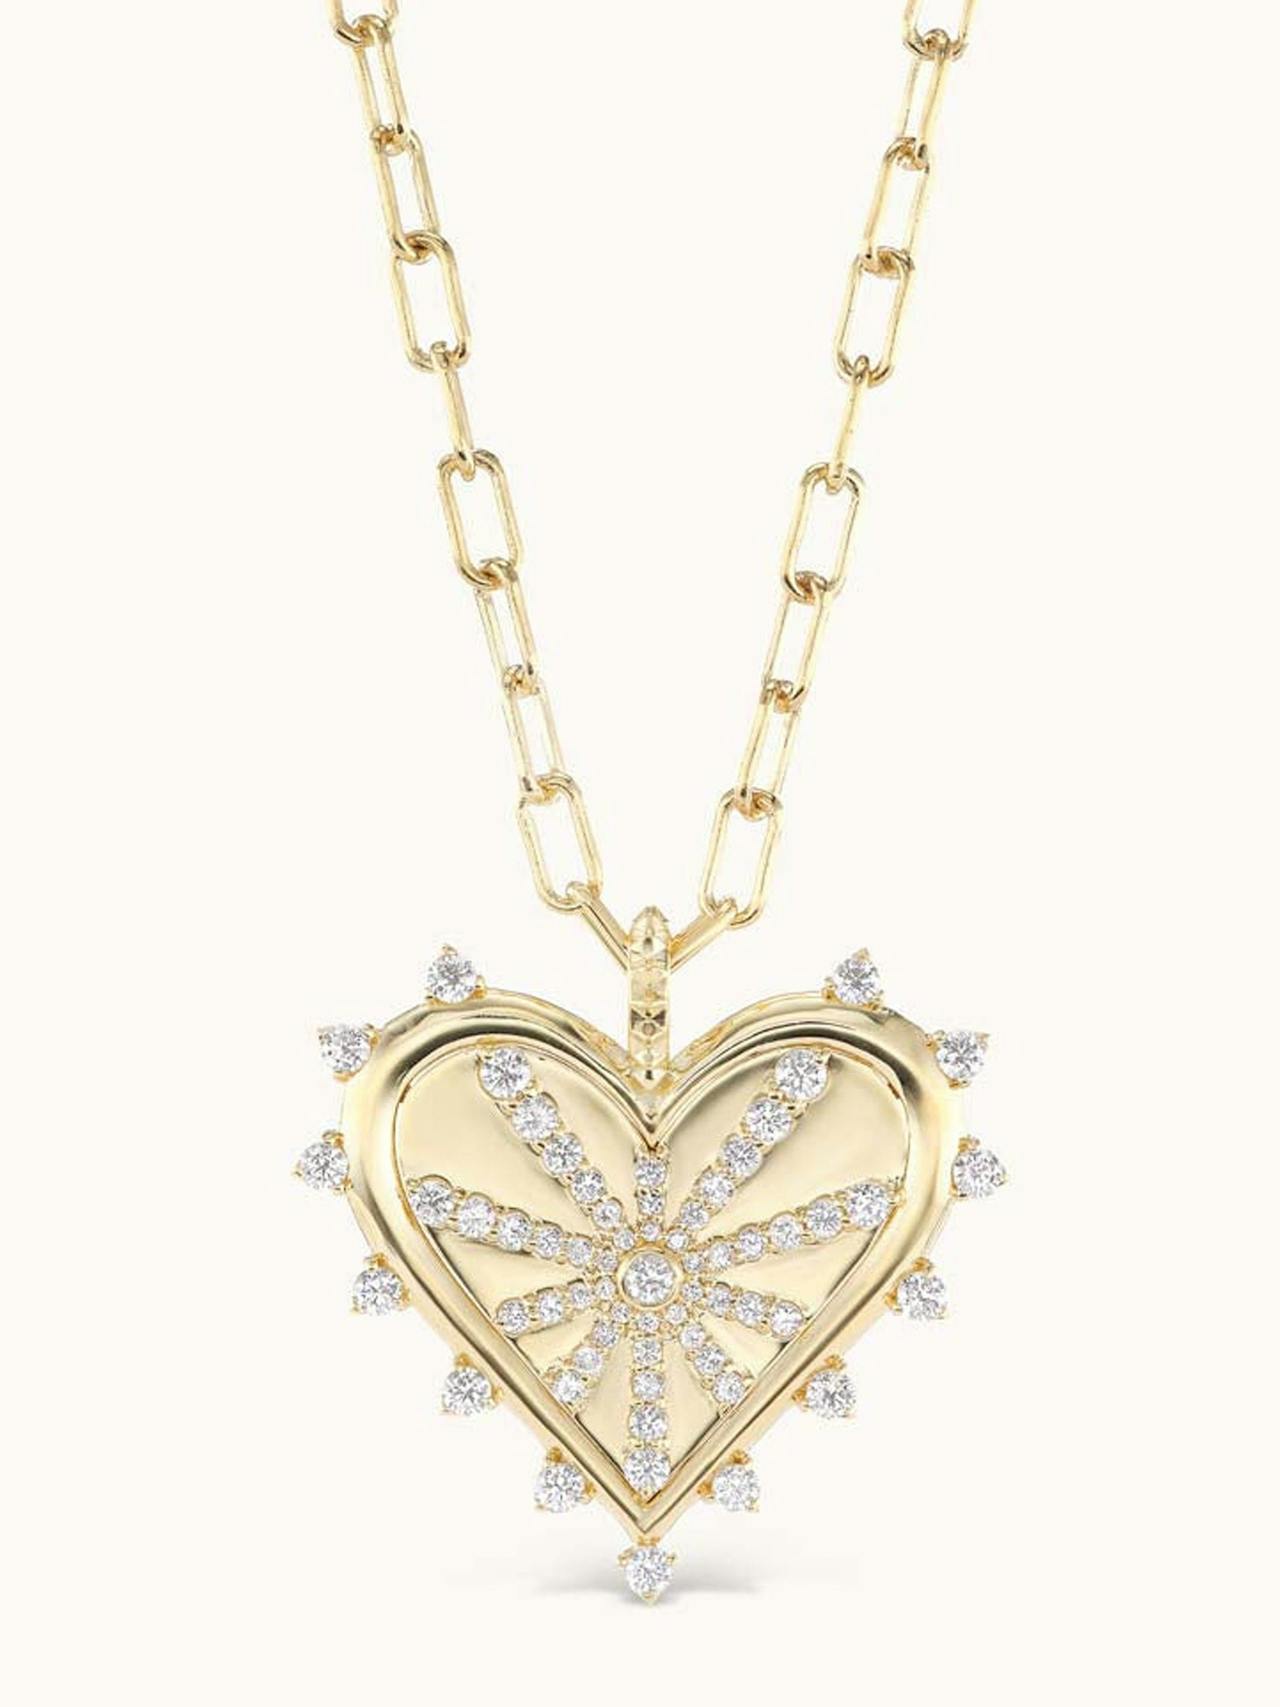 Spiked heart pavé necklace